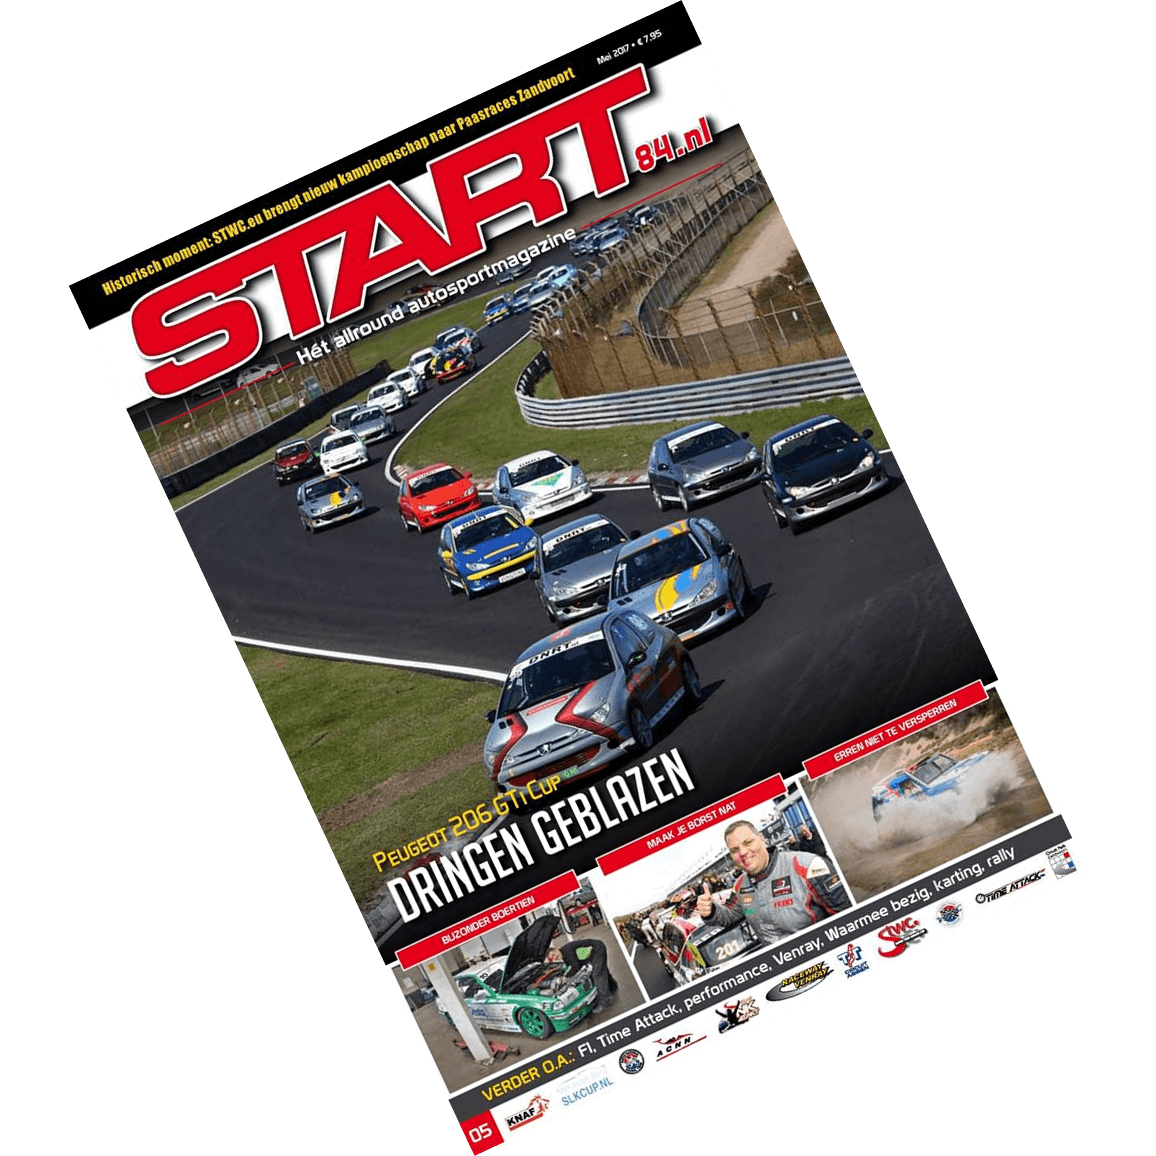 cover van START 84 Autosportmagazine van april 2017.